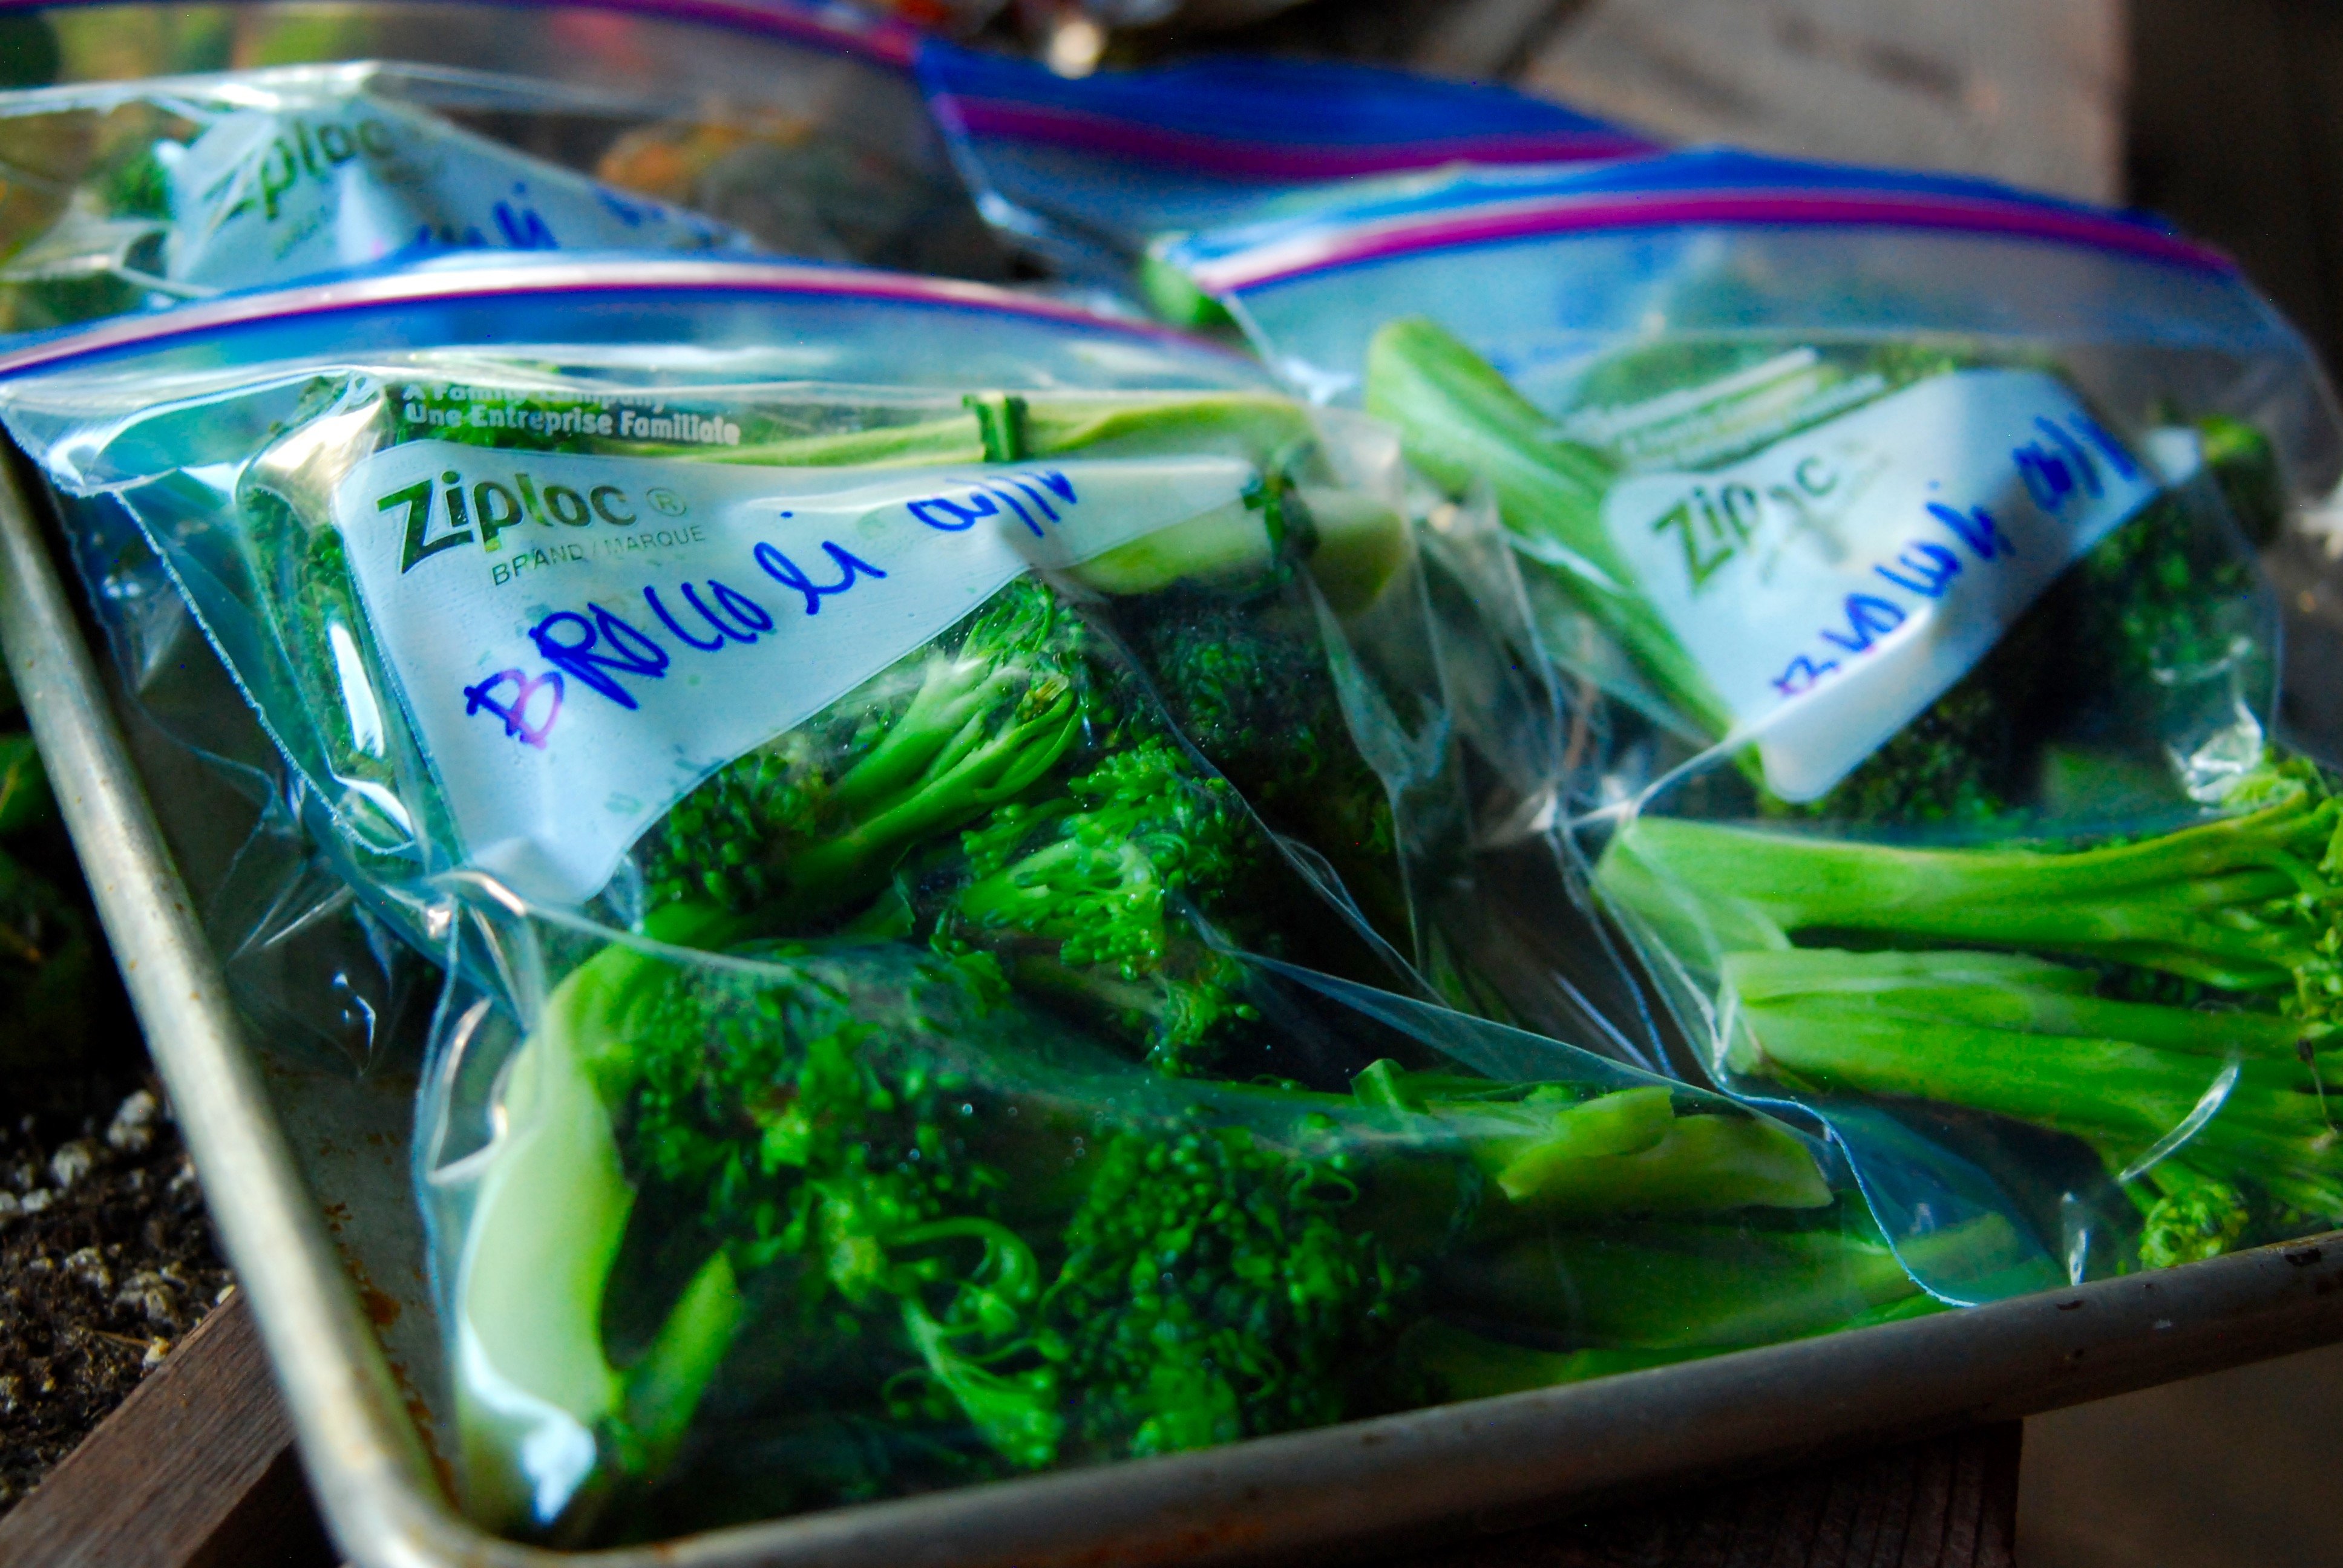 Broccoli ready for the freezer